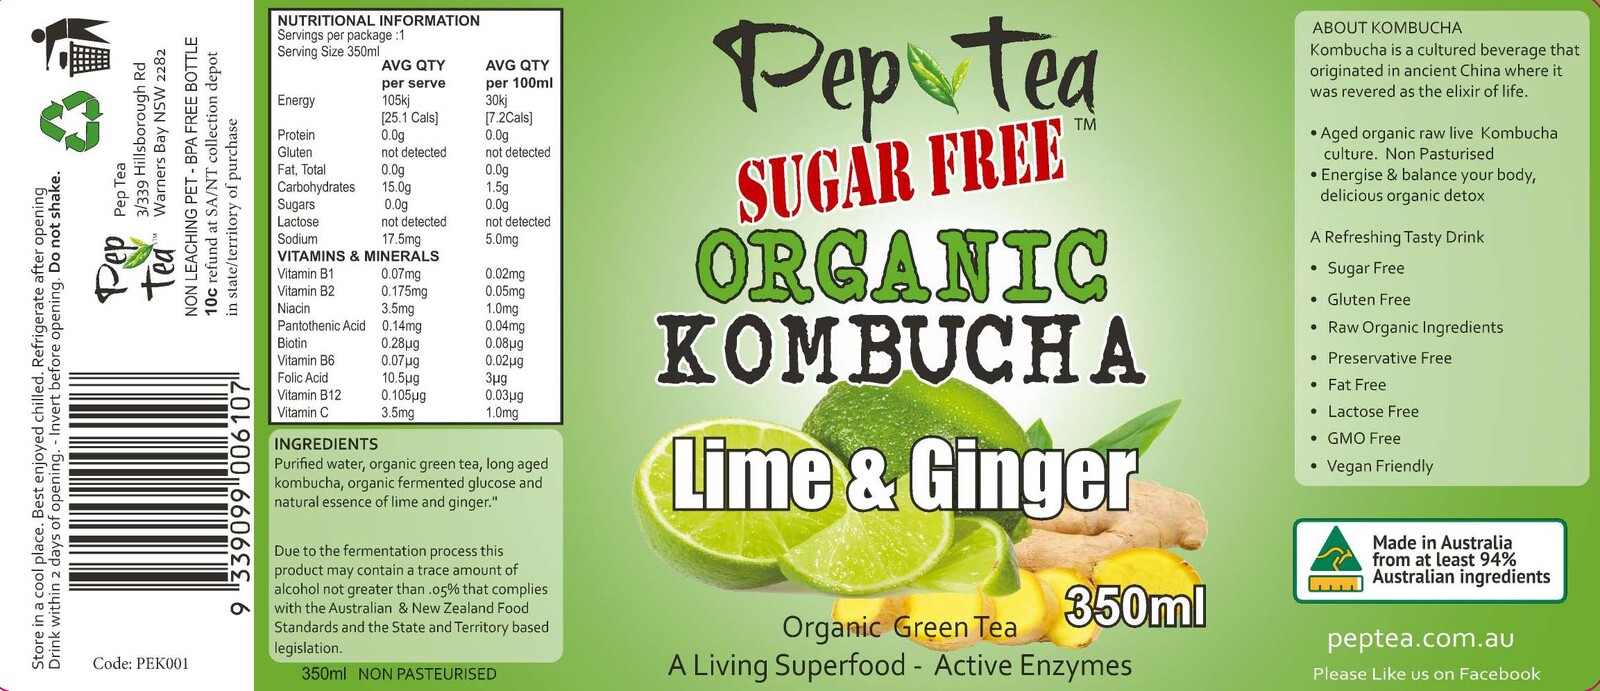 Organic Kombucha Tea - Lime & Ginger - SUGAR FREE Drinks - 12 Pack